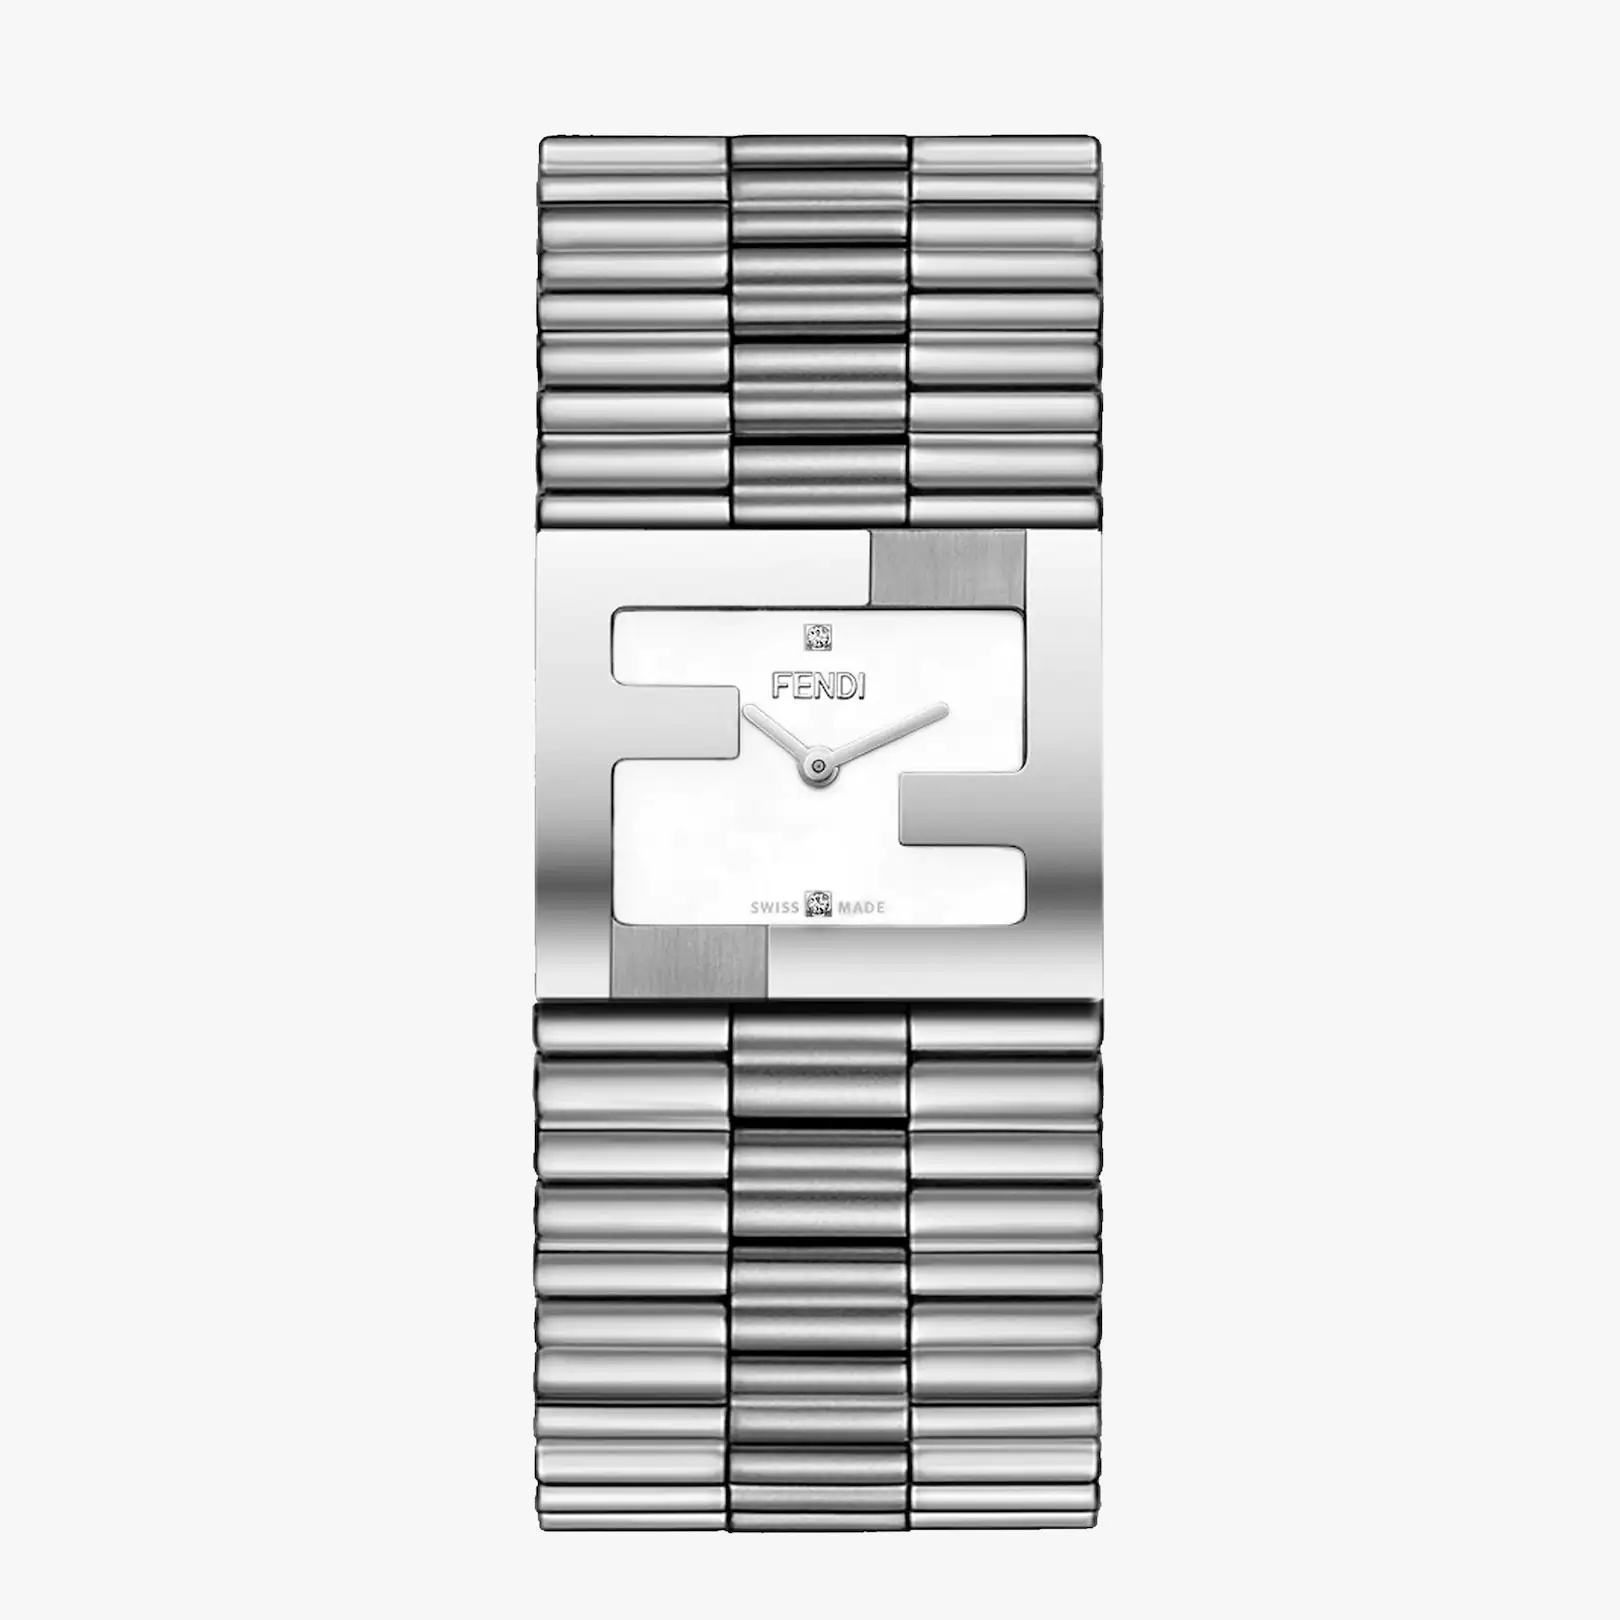 24 x 20 MM - Watch with FF logo bezel - 1